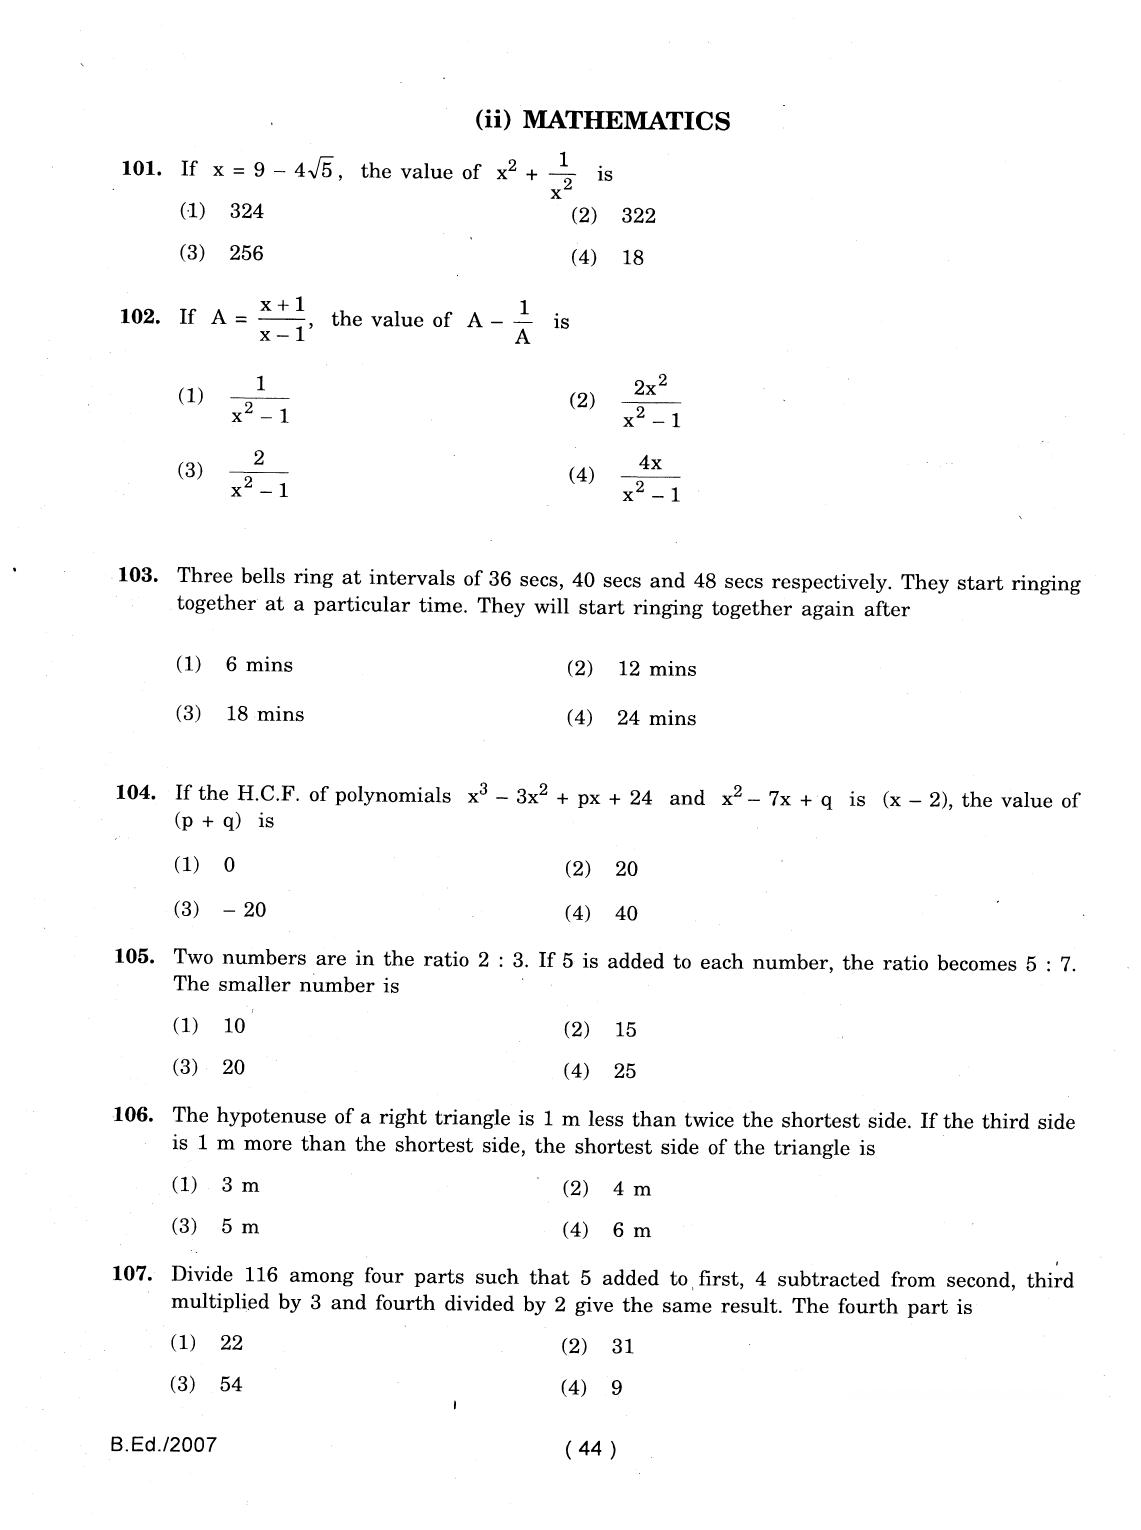 IGNOU B.Ed 2007 Question Paper - Page 44